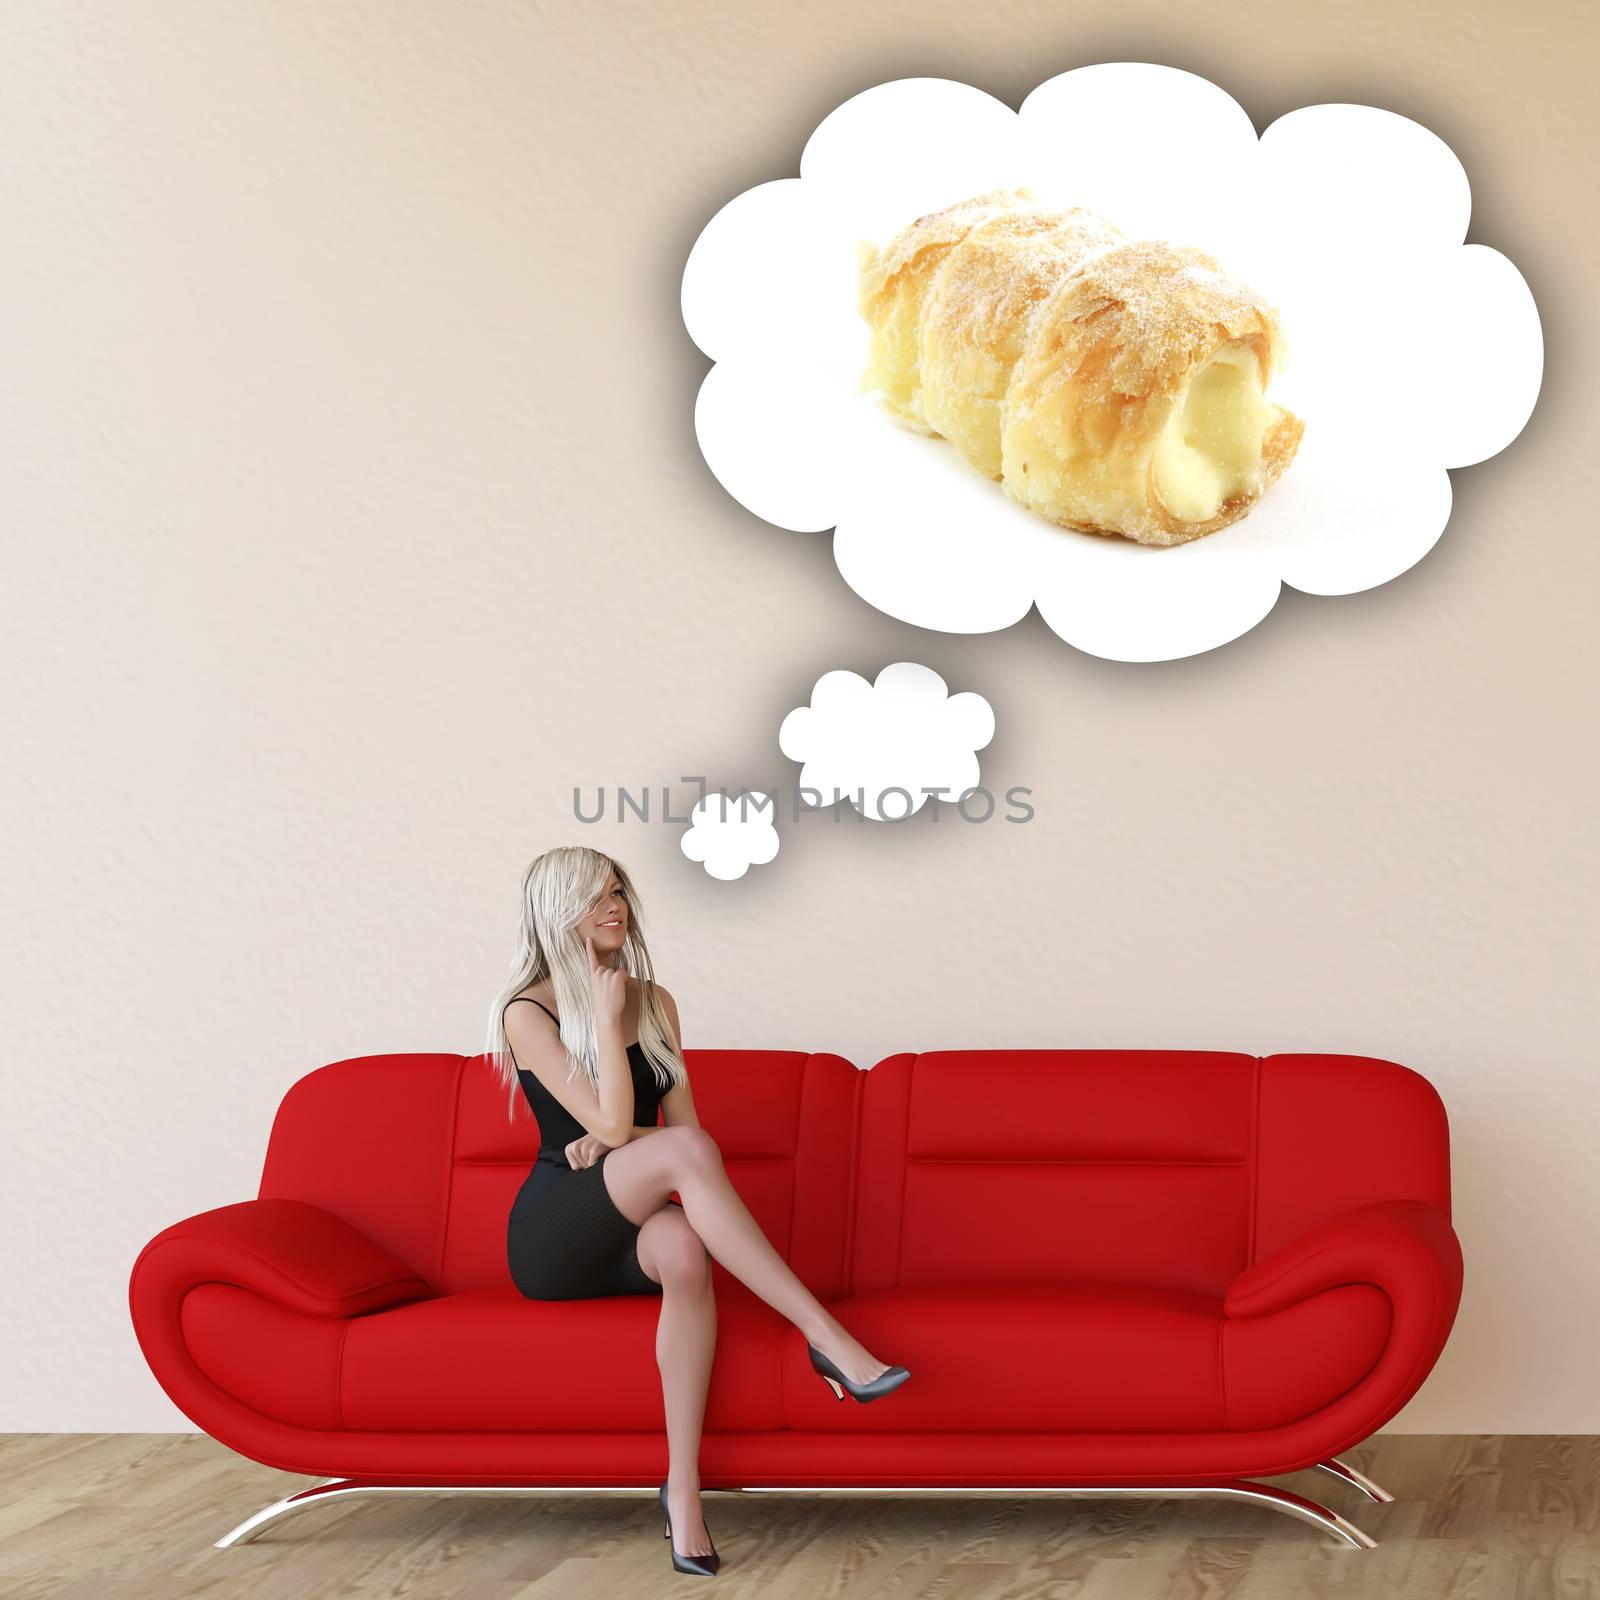 Woman Craving Pastries by kentoh